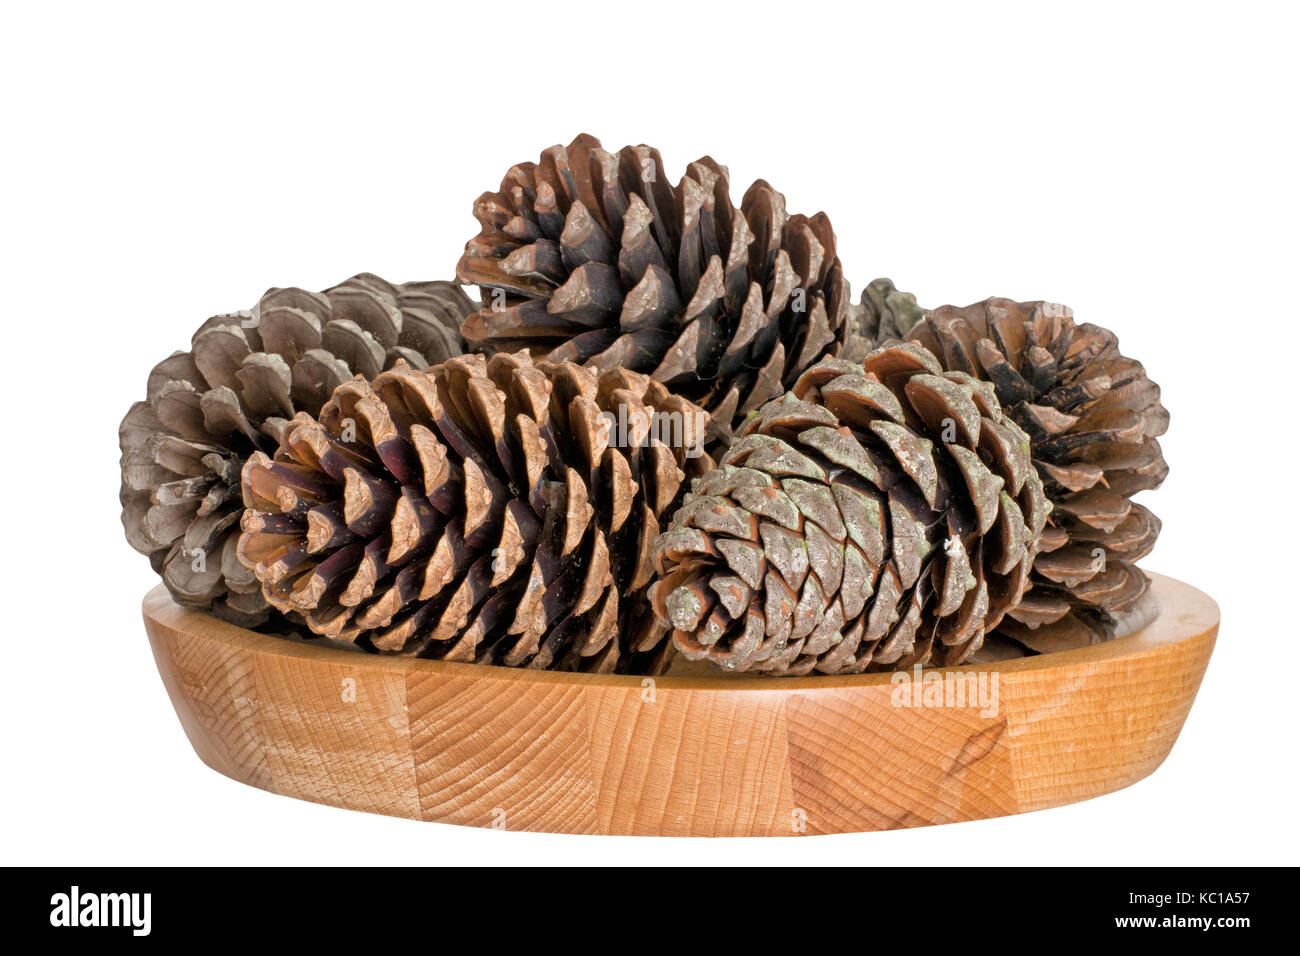 Pine cones, winter festive or seasonal decoration. Stock Photo